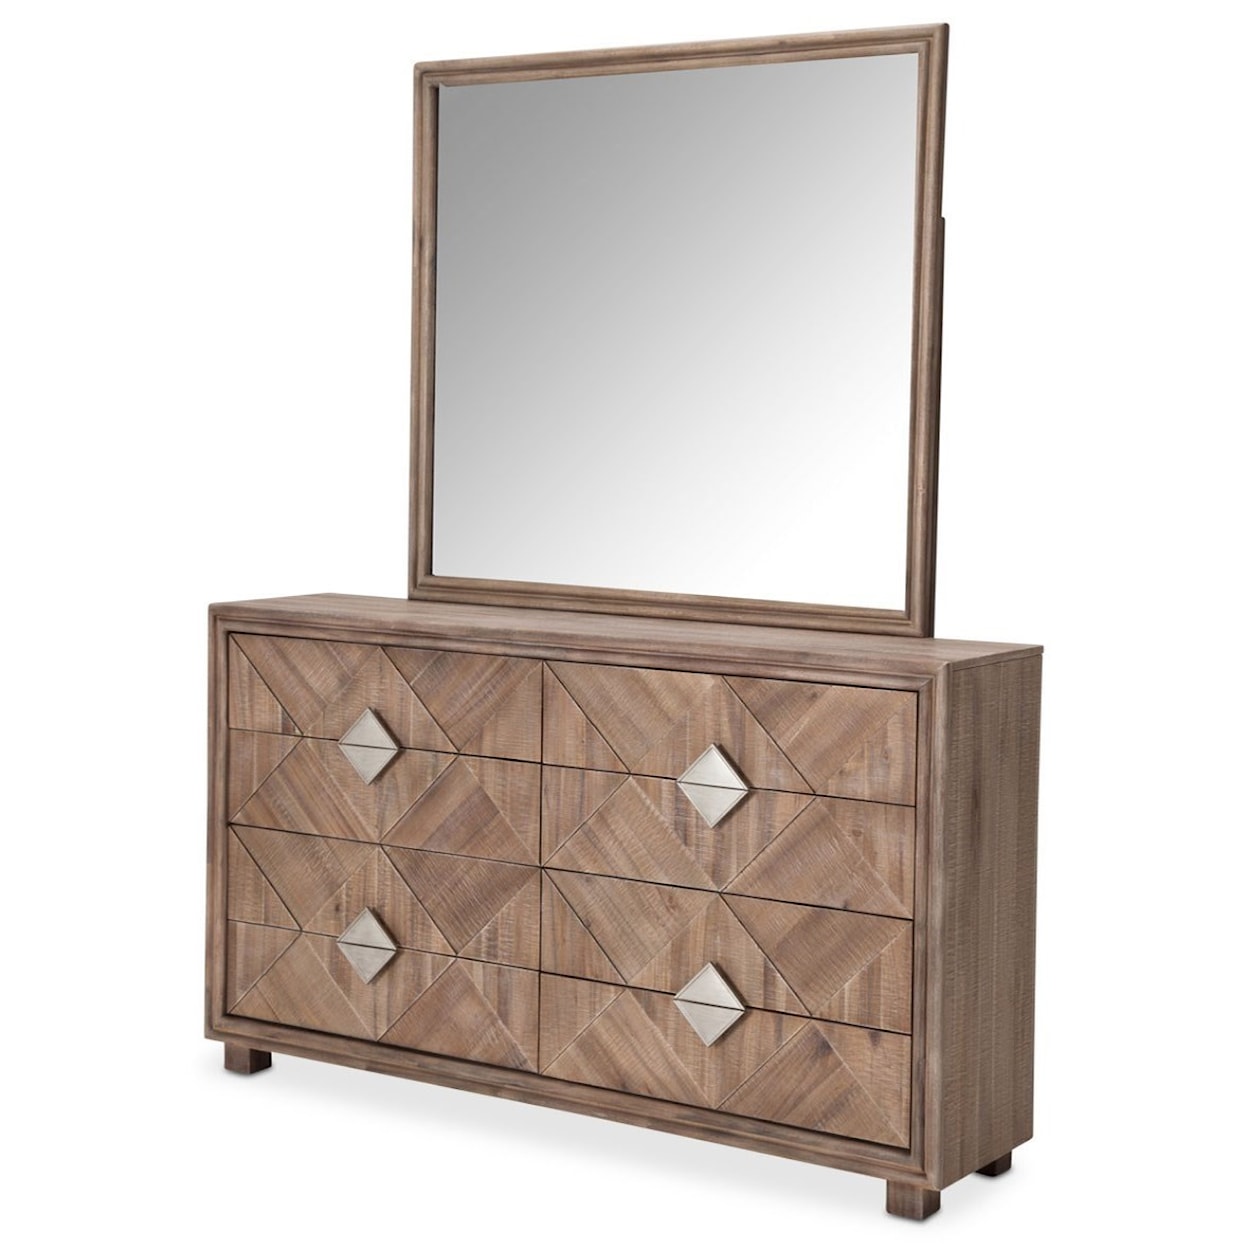 Michael Amini Hudson Ferry 8-Drawer Dresser and Mirror Set